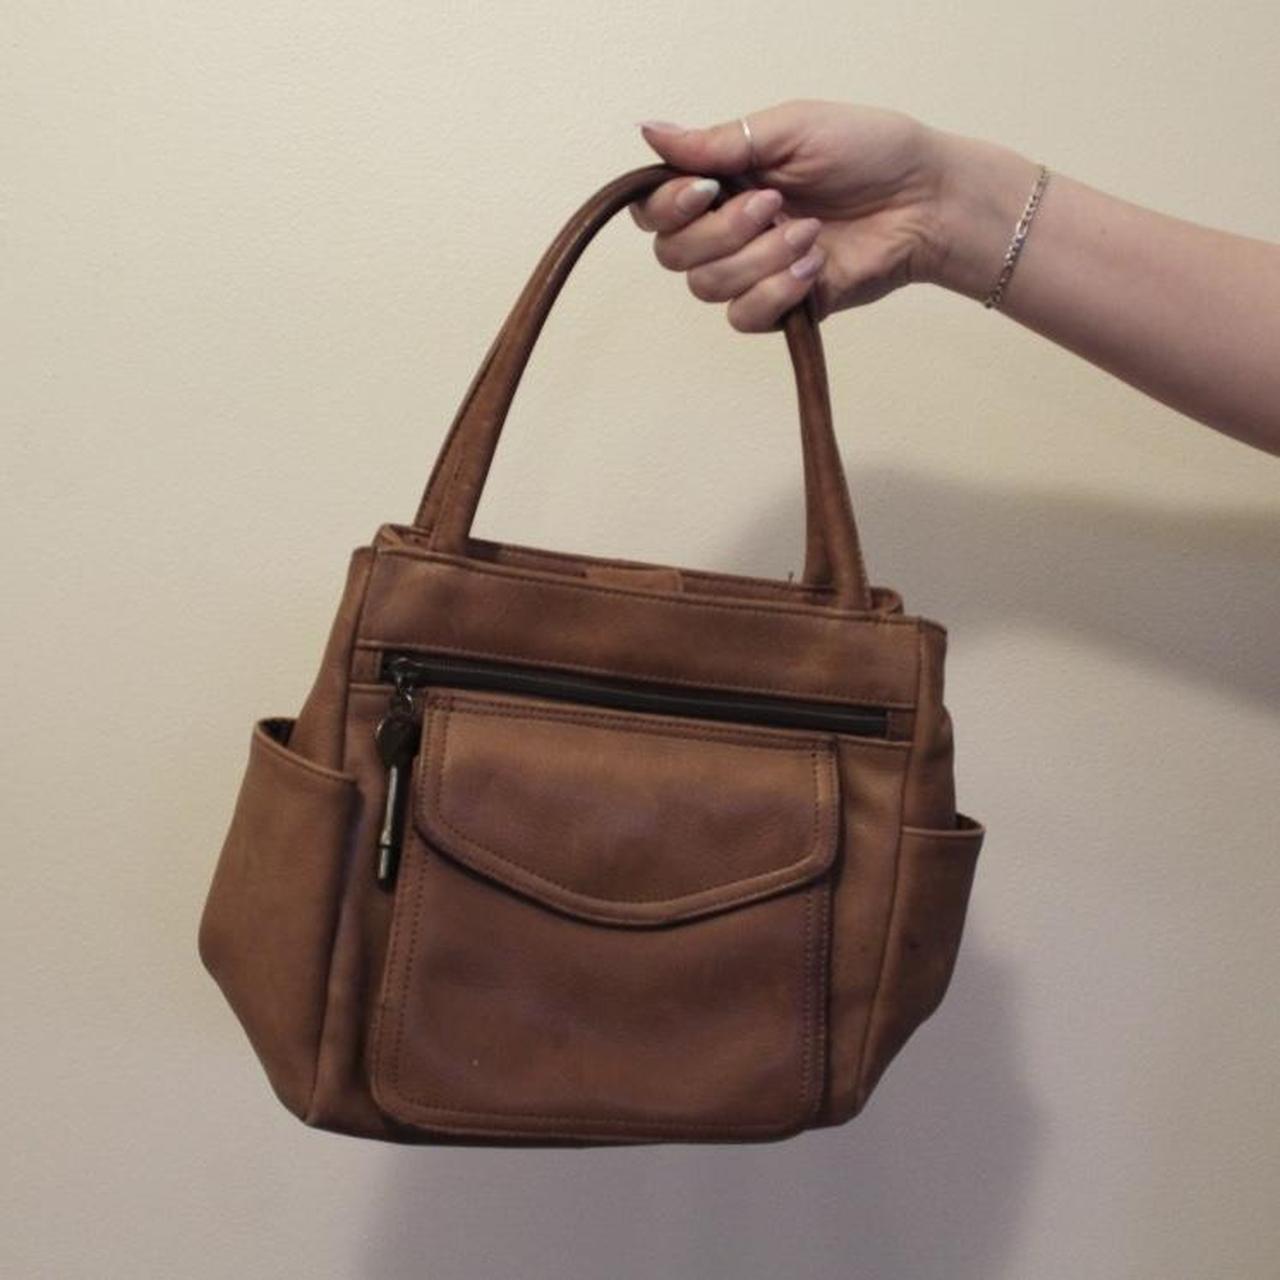 Vintage Fossil 1954 Purse 75082 Chocolate Leather Purse Handbag | eBay